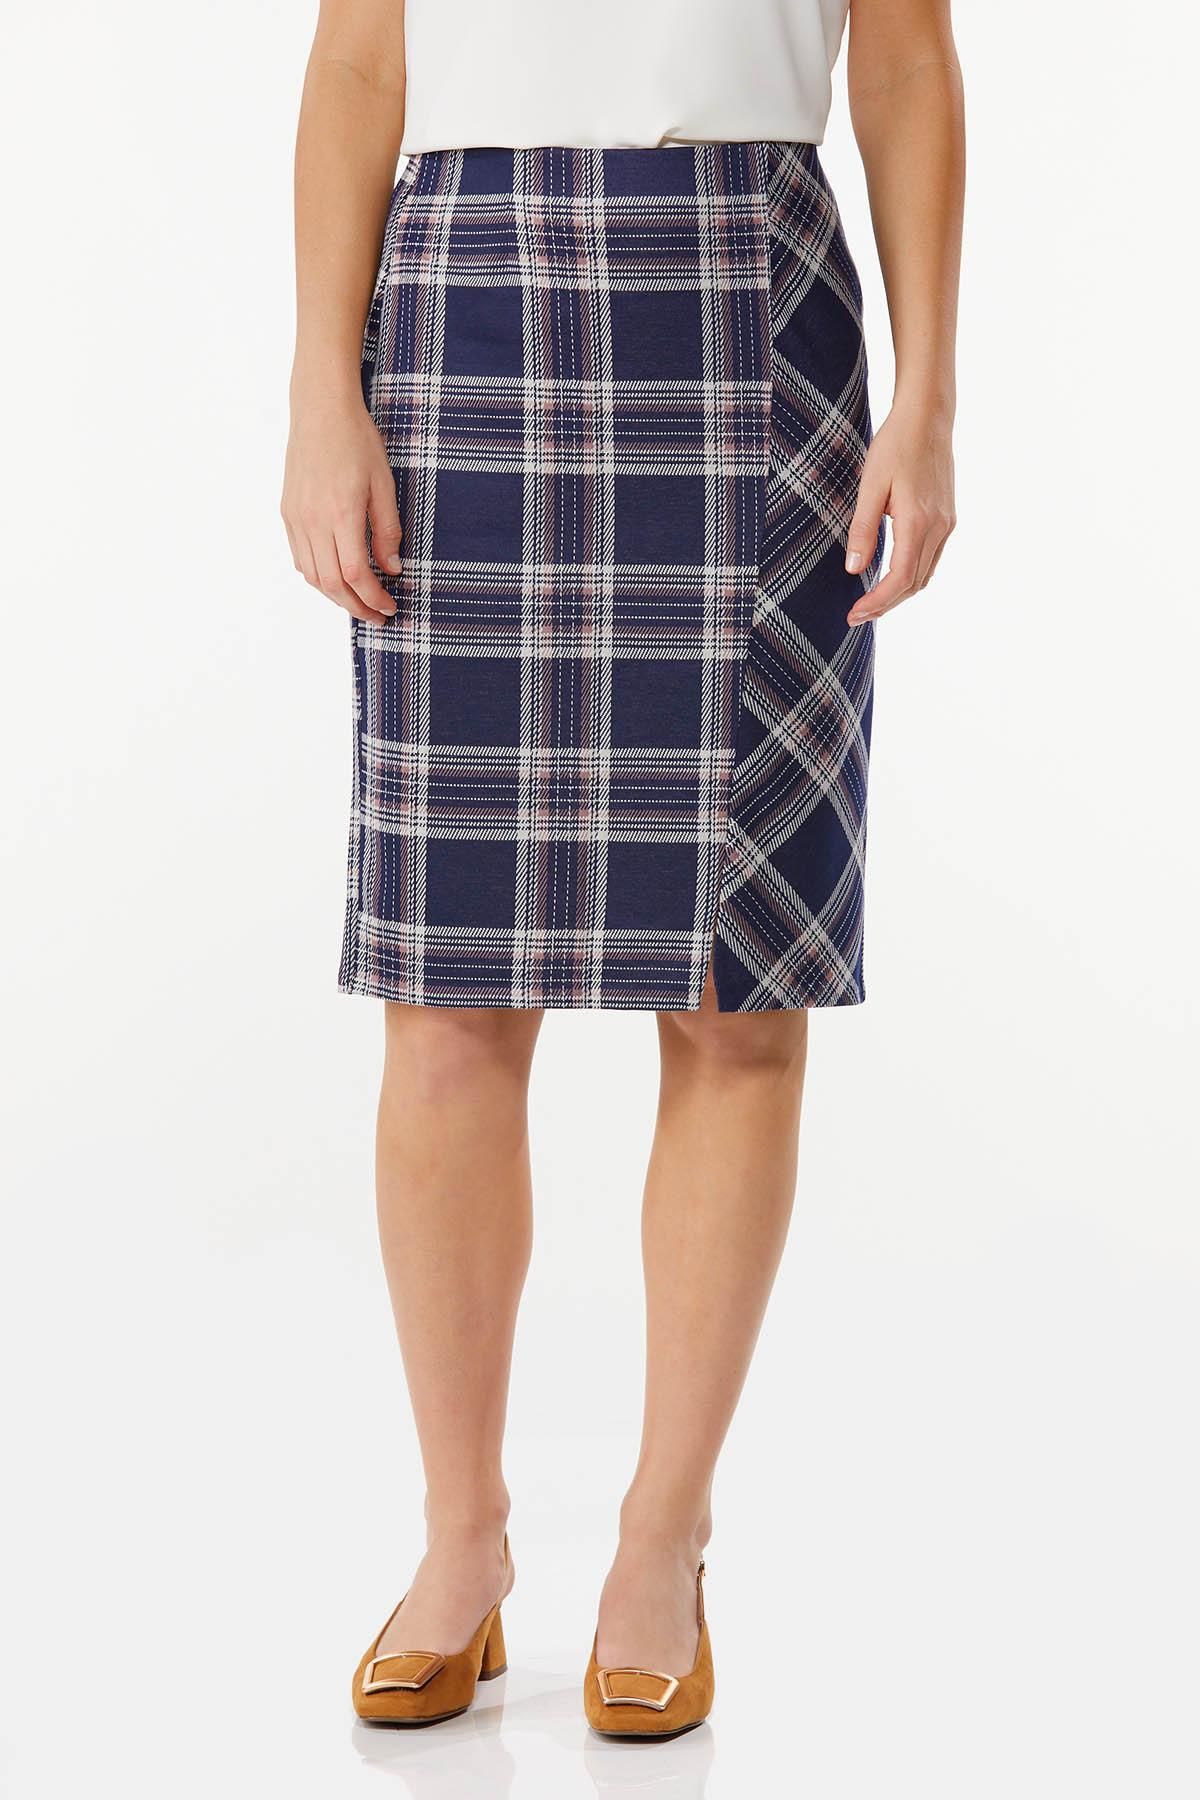 Navy Plaid Pull-On Skirt | Cato Fashions